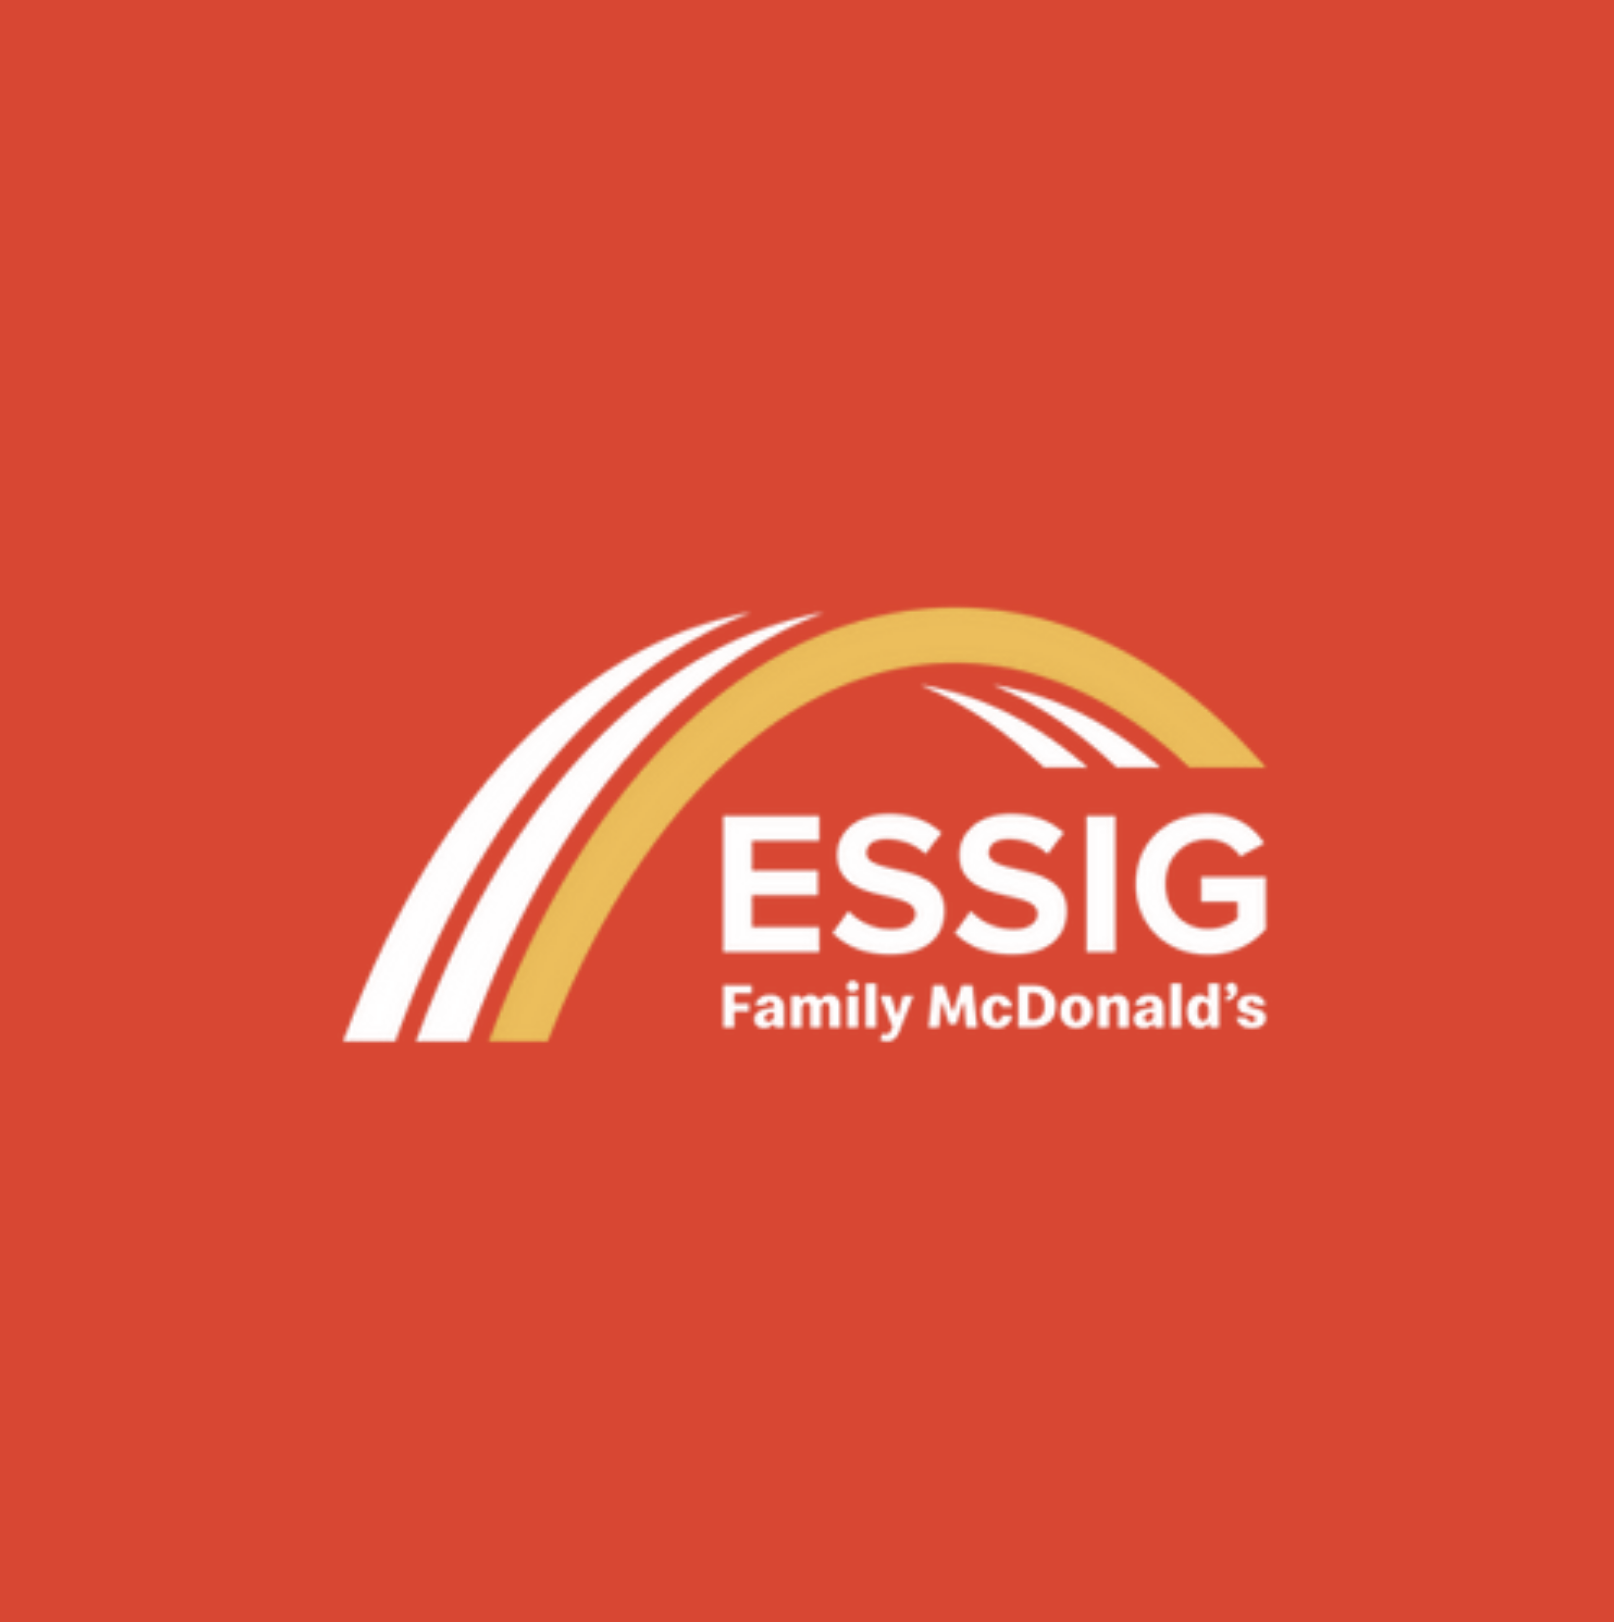 Essig Family McDonald’s